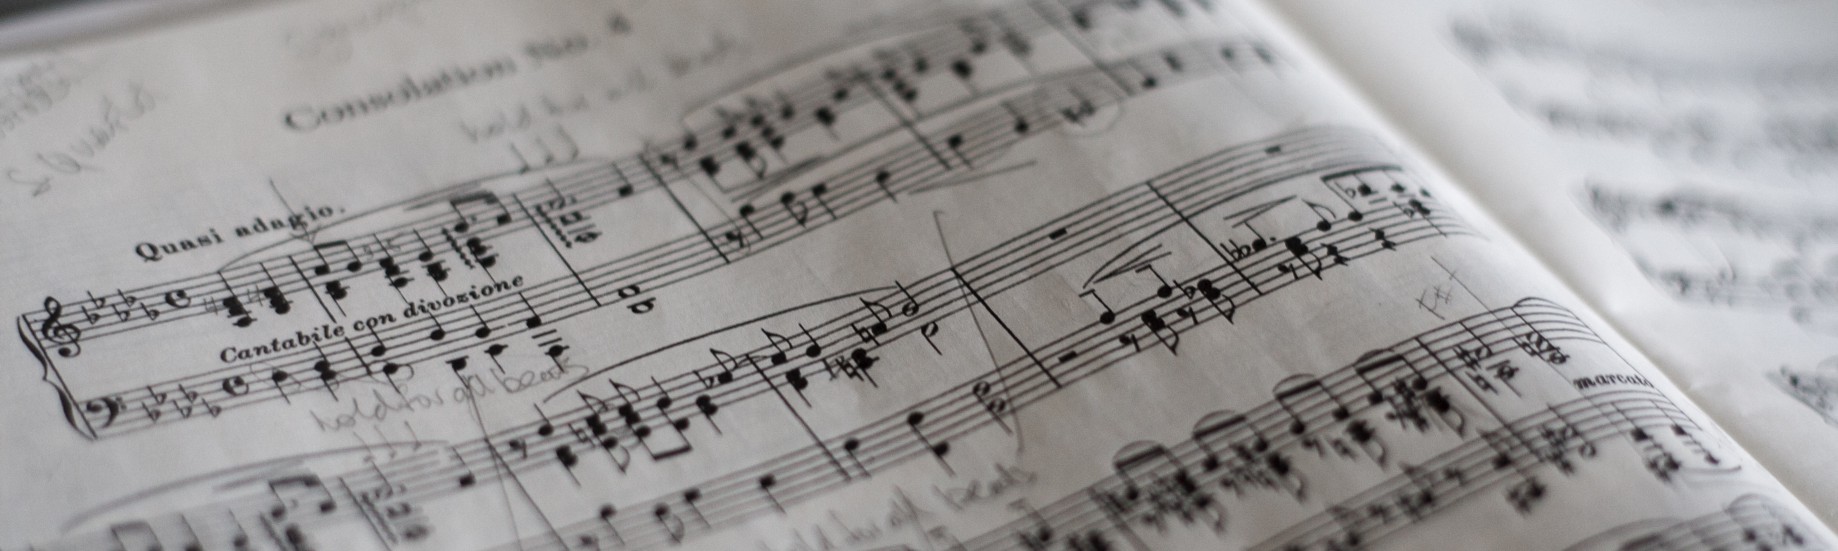 Make a Joyful Noise: Congregational Singing | by Boomer West ...